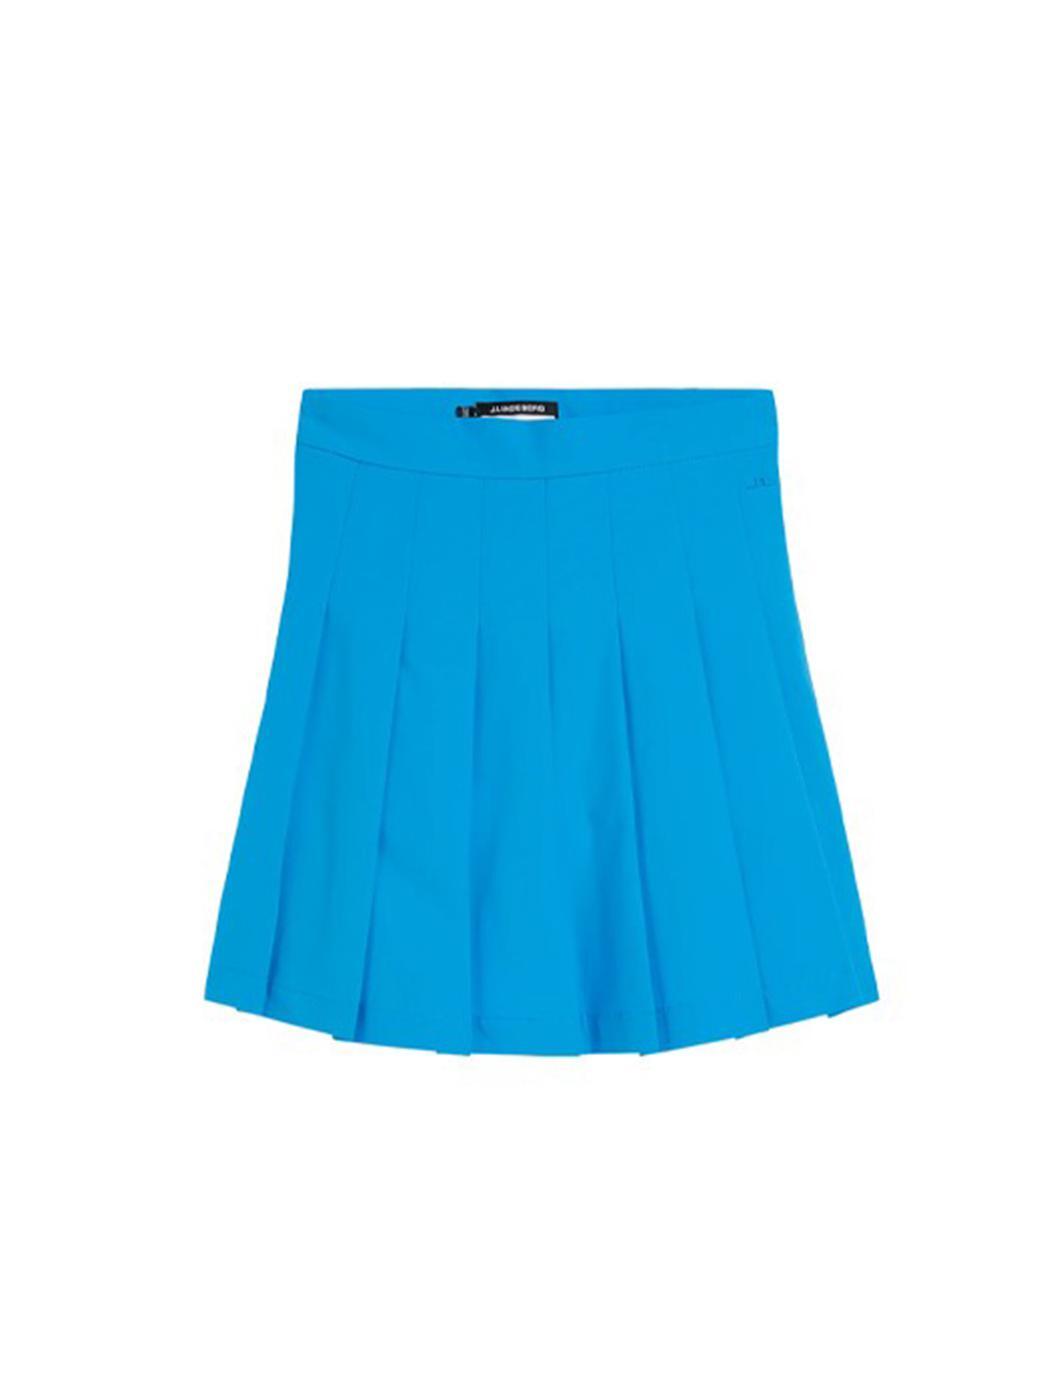 Jay Lindbergh SS Adina Golf Skirt Blue